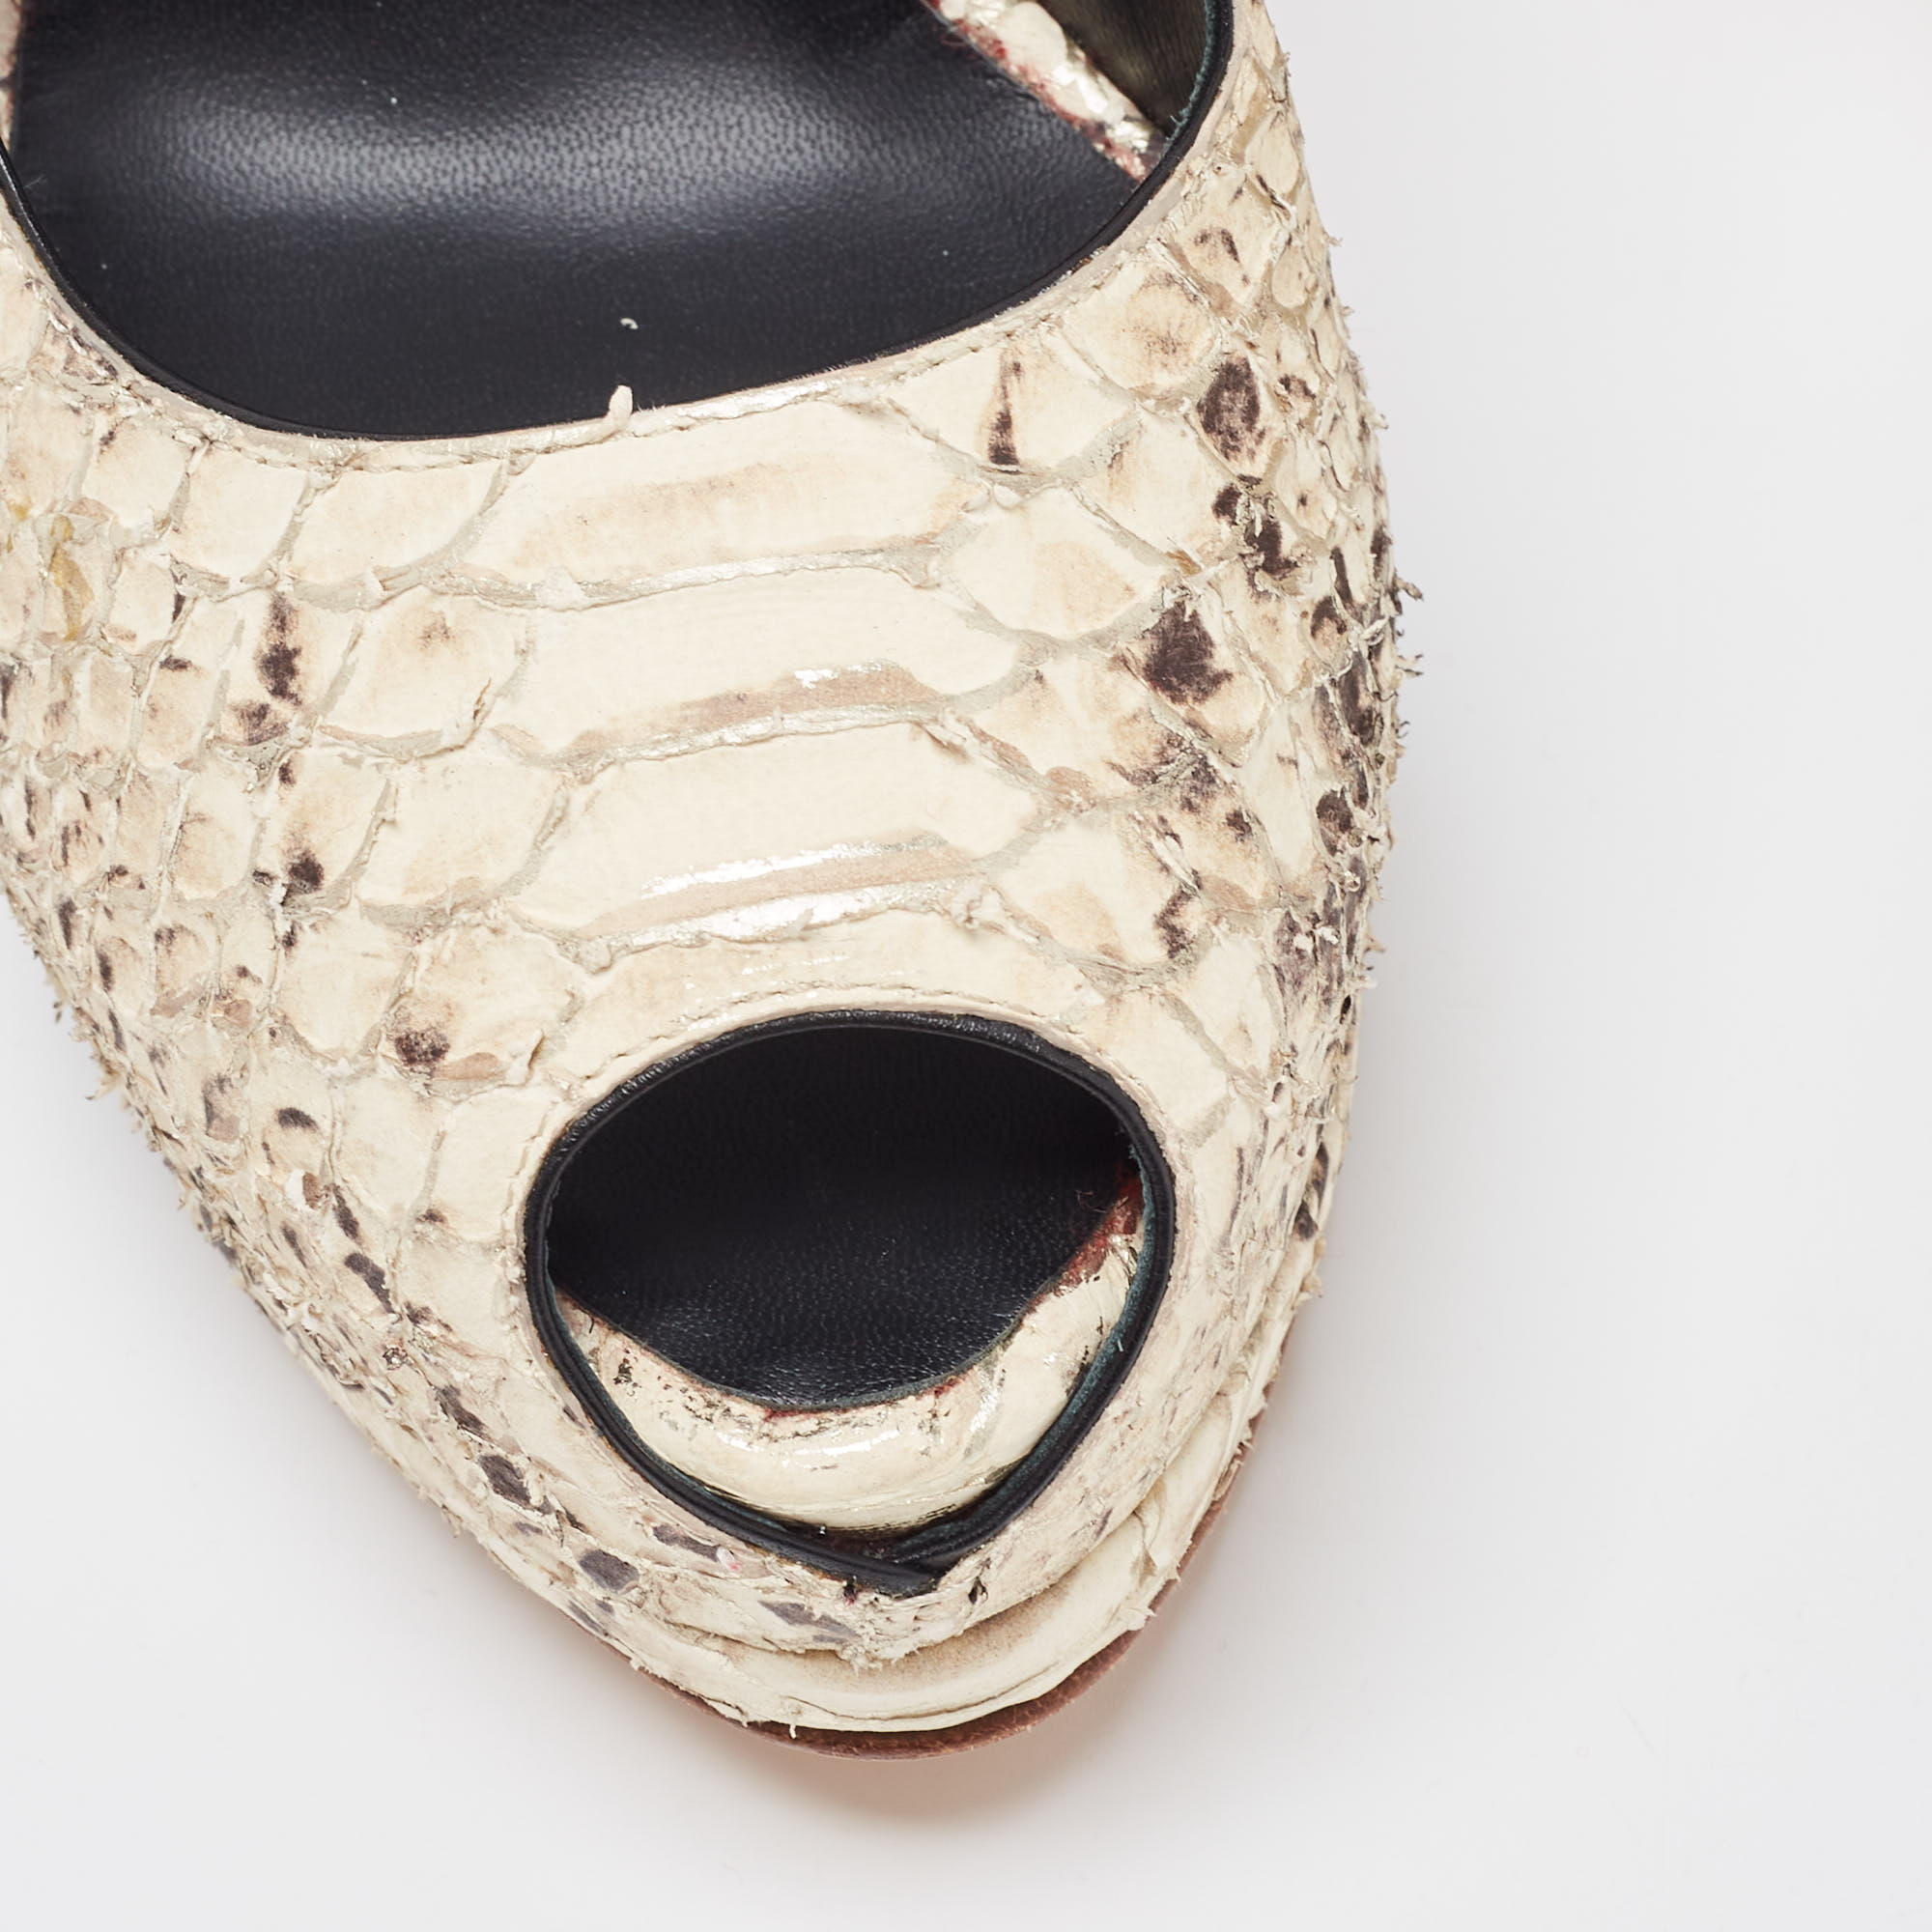 Giuseppe Zanotti Cream/Brown Python Embossed Leather Peep Toe Pumps Size 40